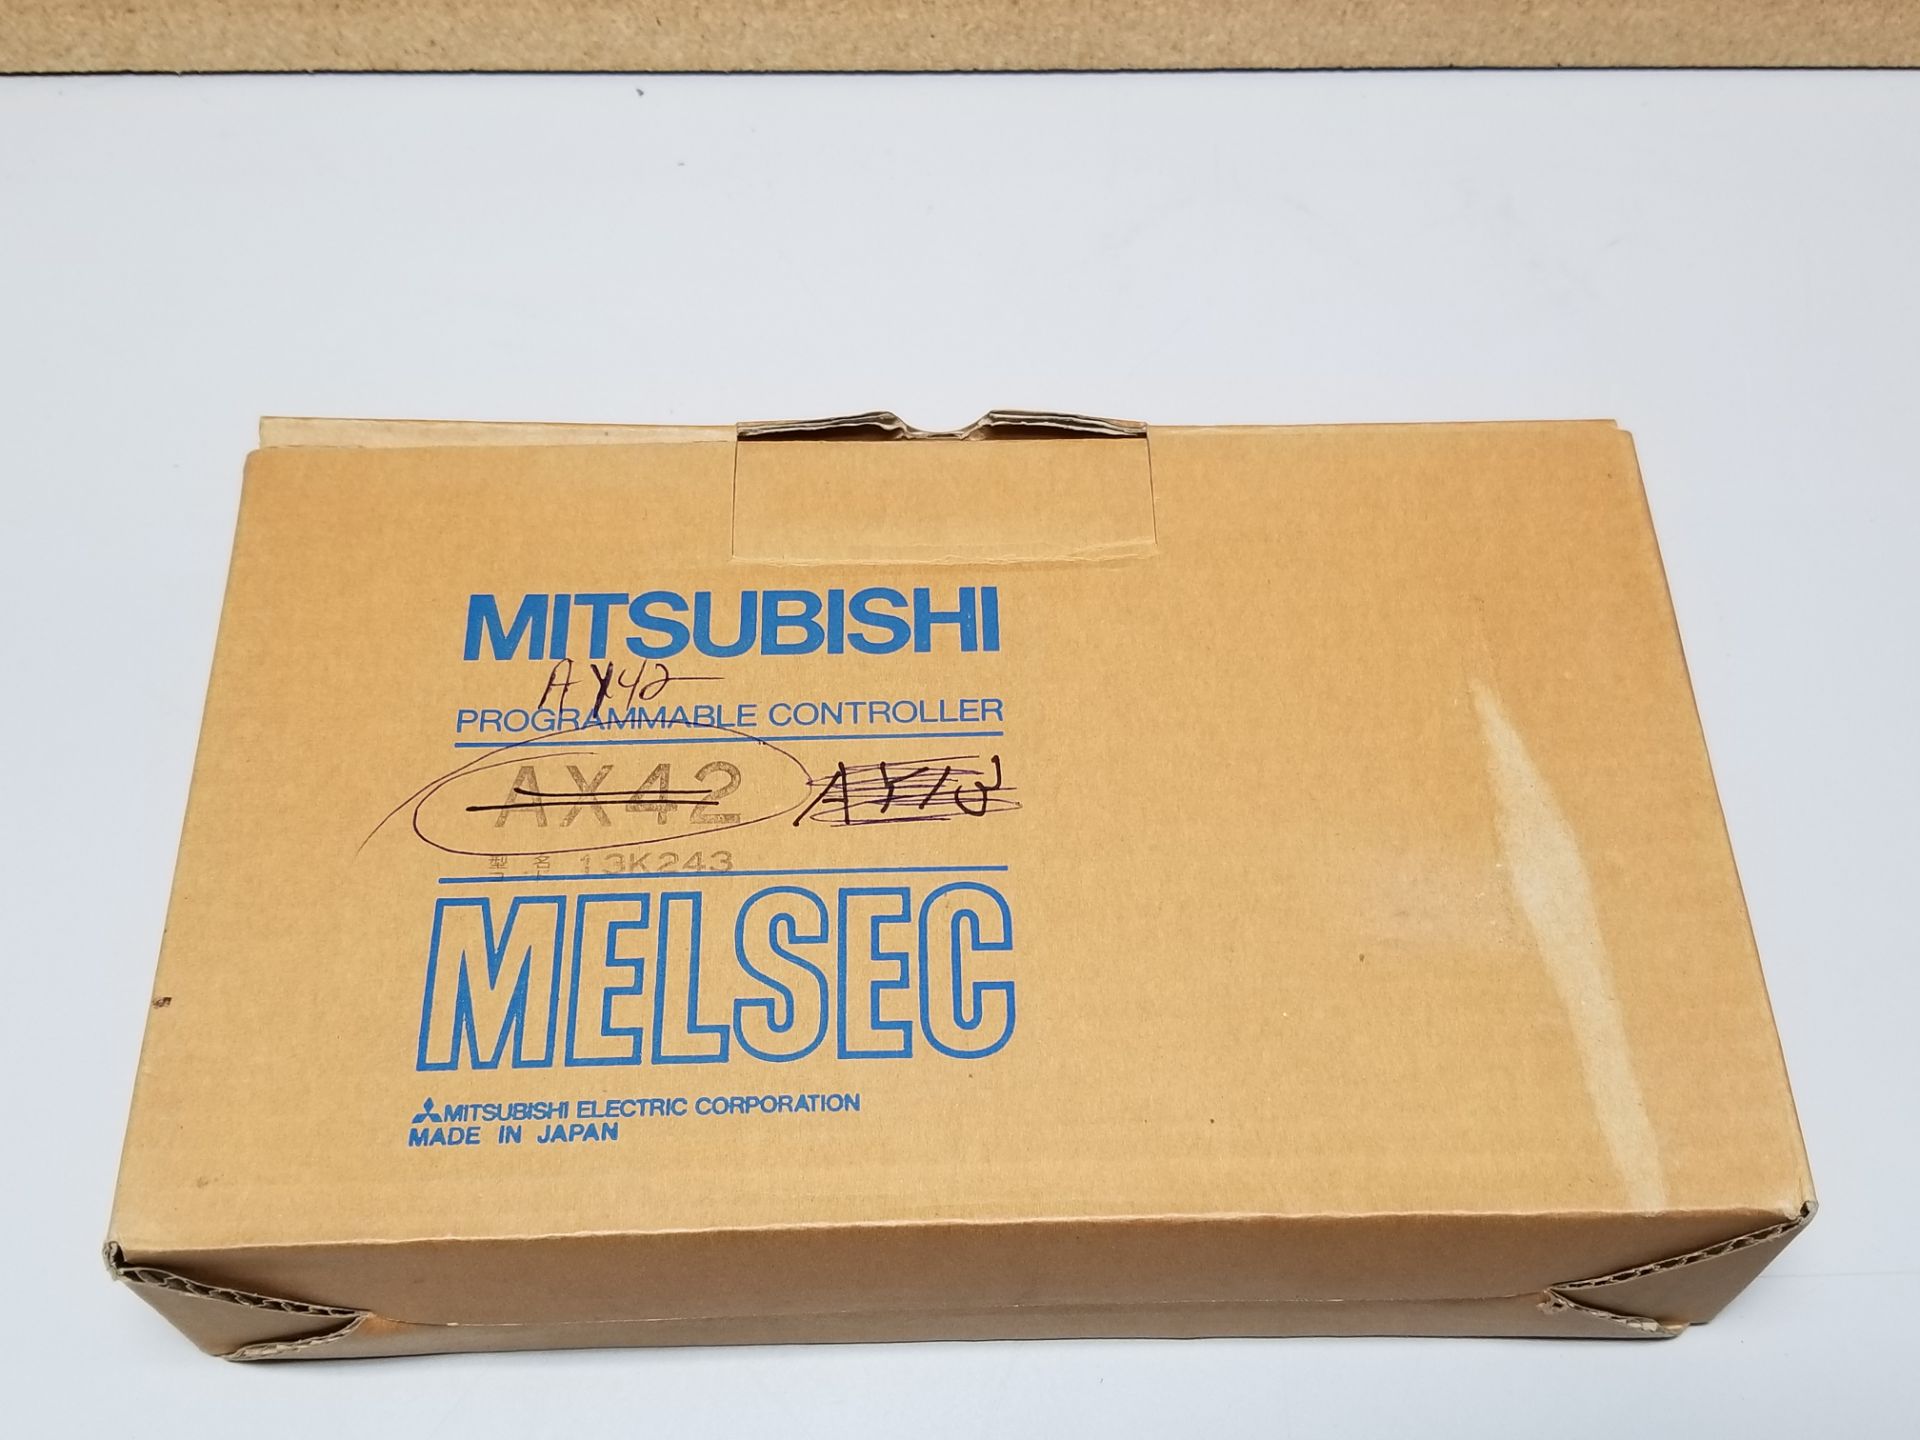 UNUSED MITSUBISHI MELSEC AY42 PLC MODULE